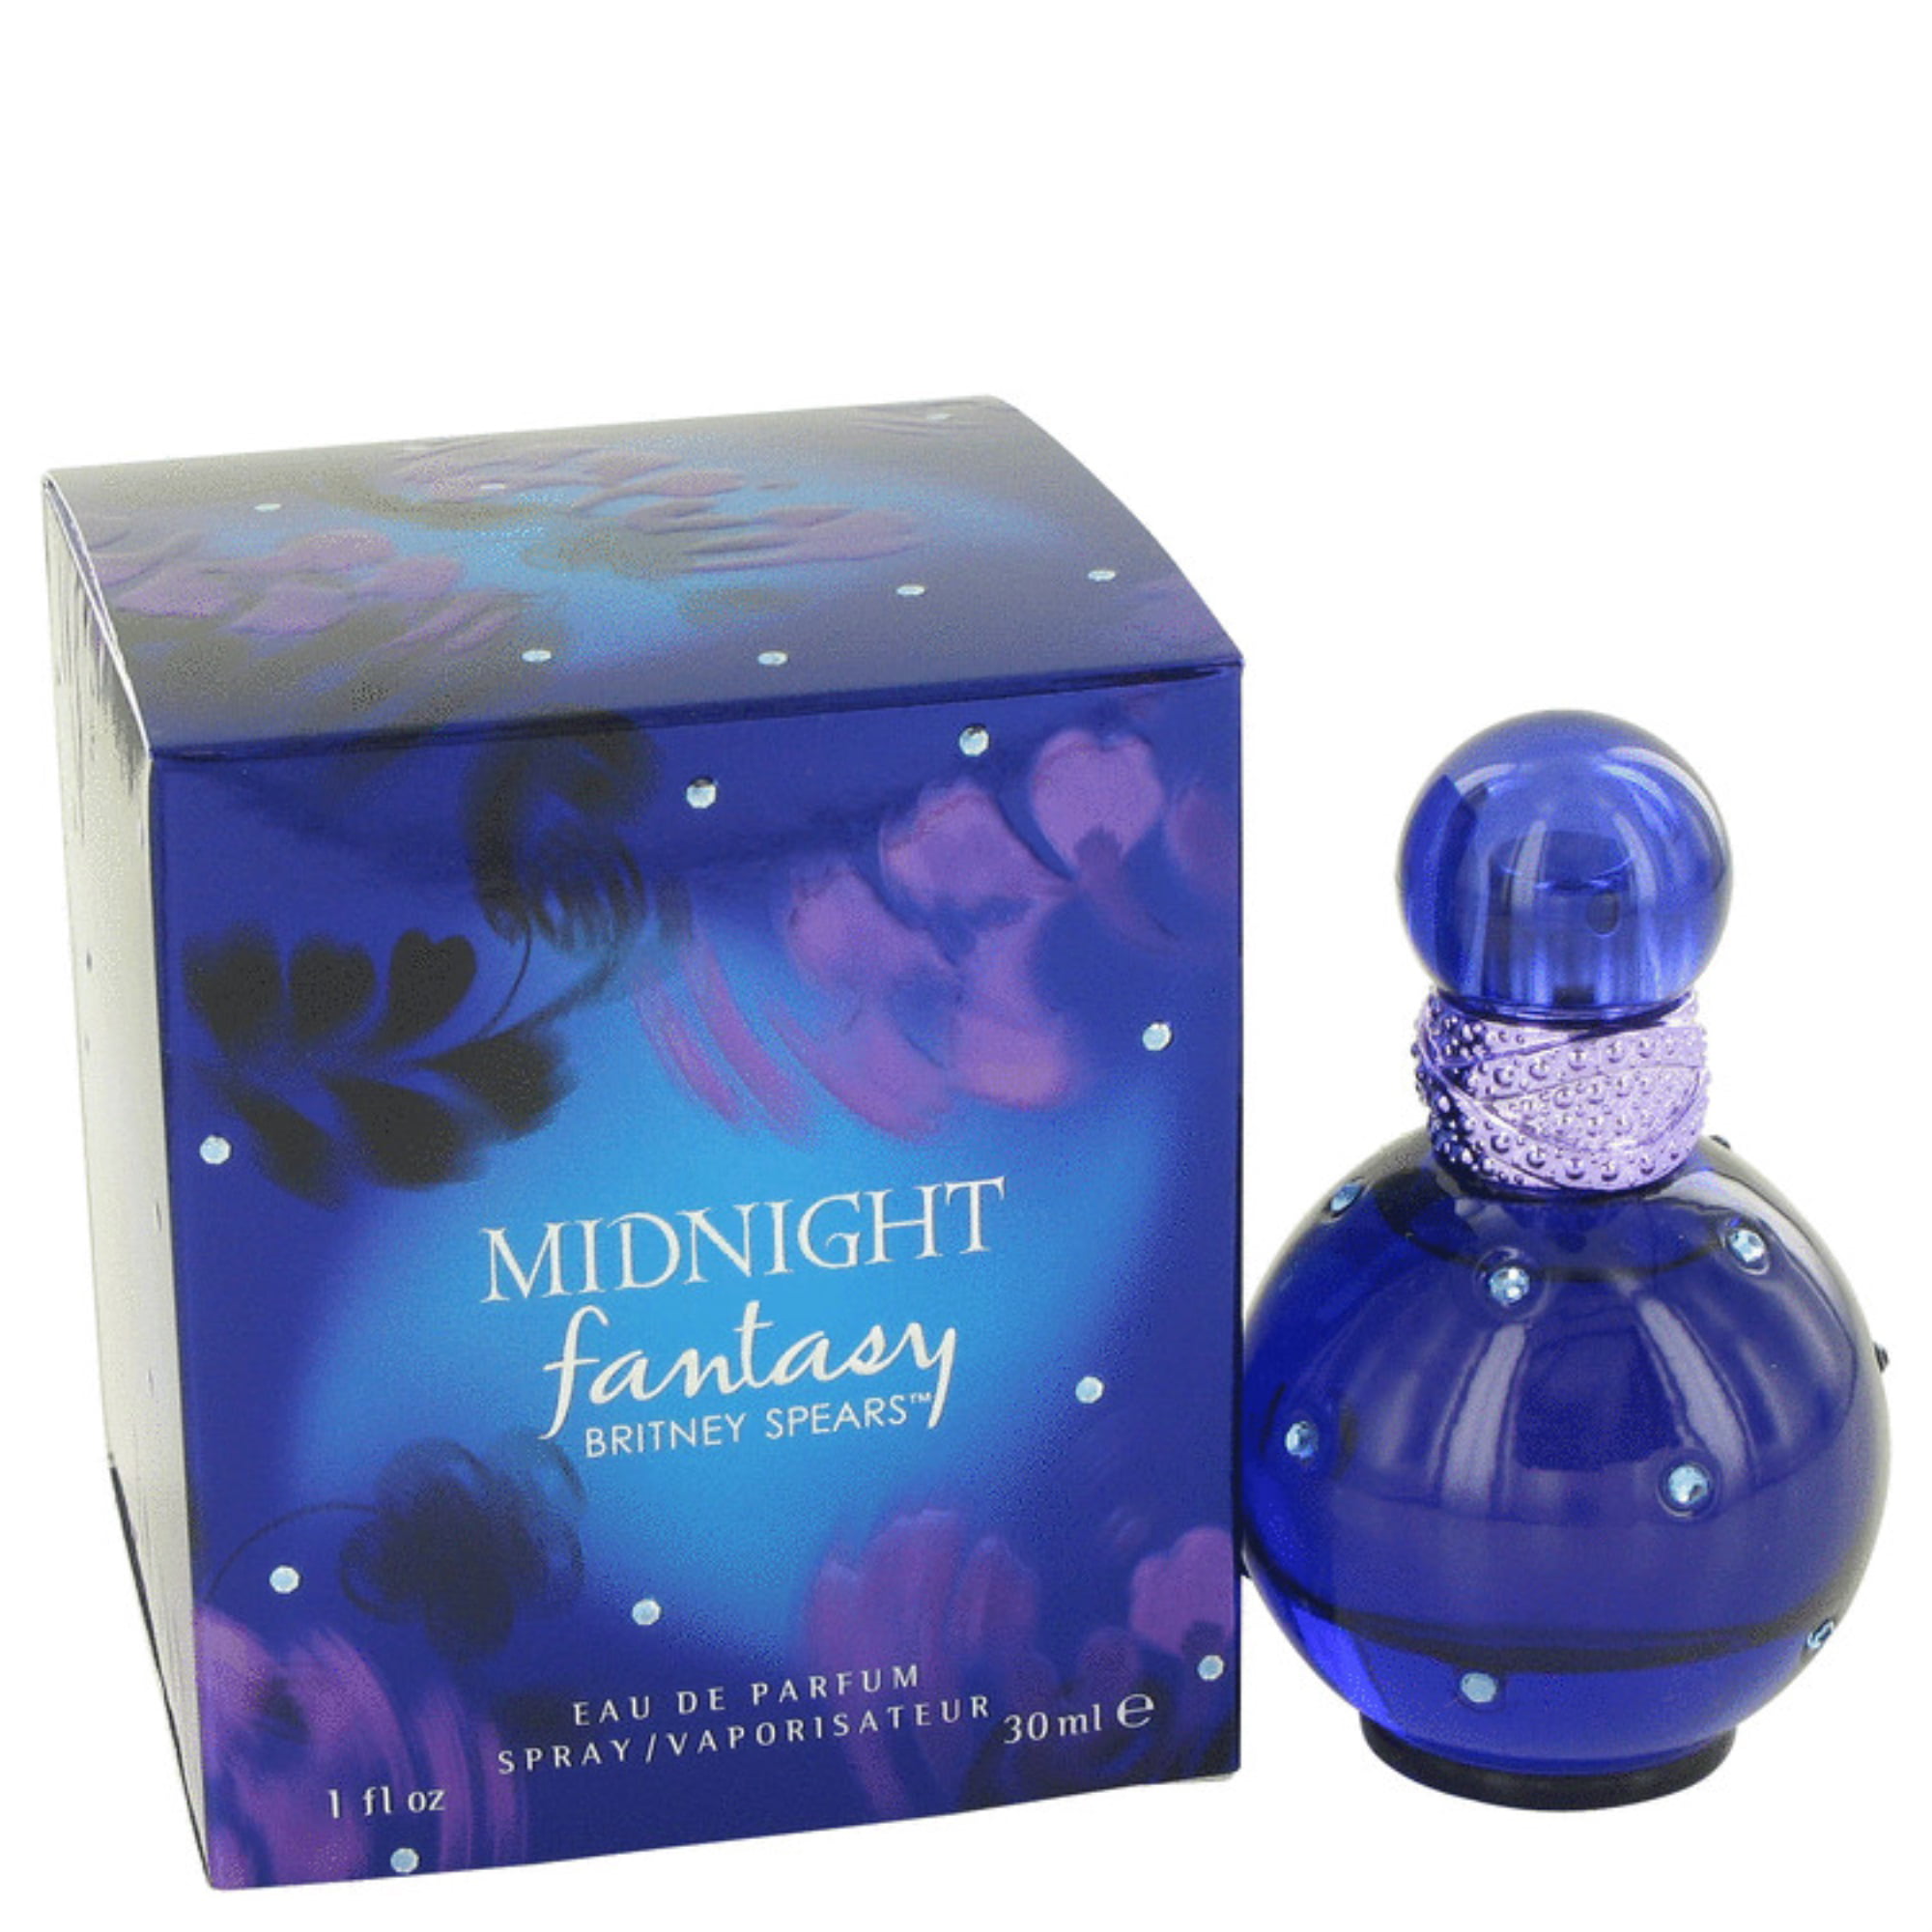 Britney spears midnight perfume